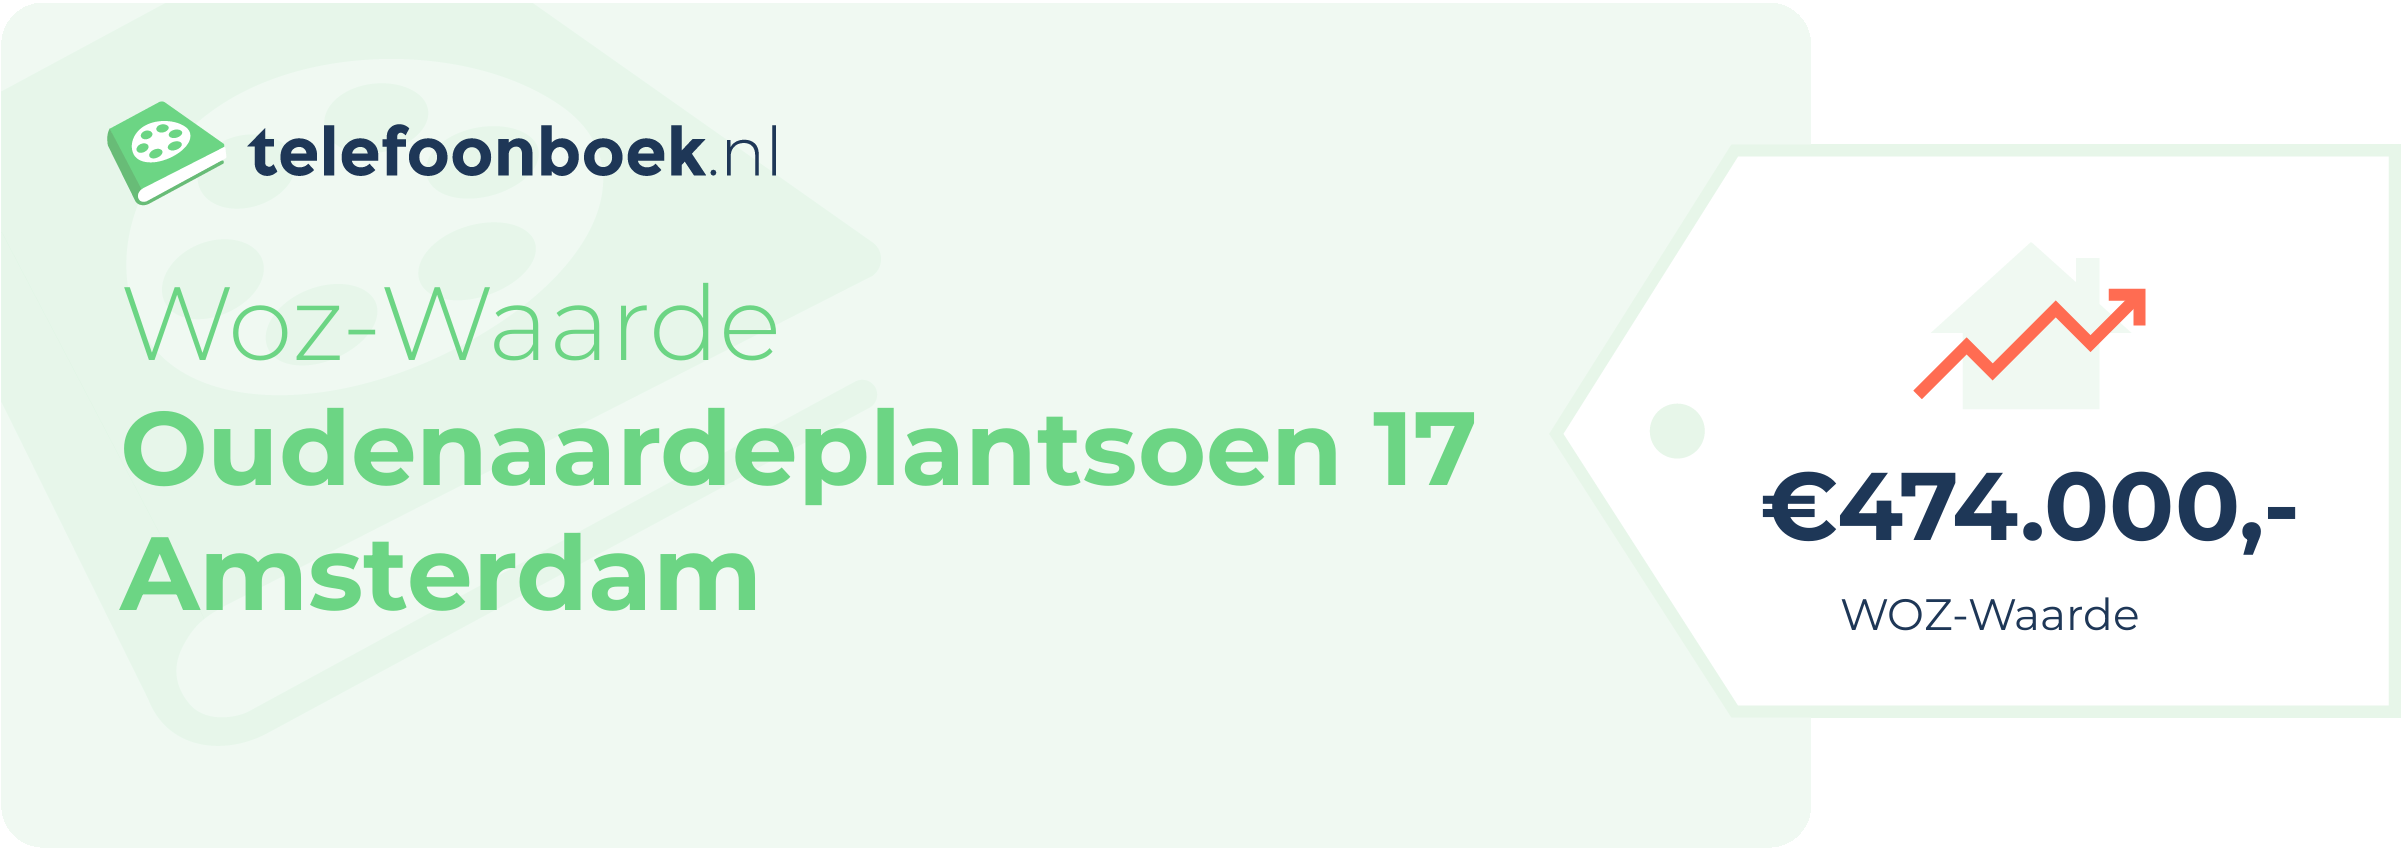 WOZ-waarde Oudenaardeplantsoen 17 Amsterdam